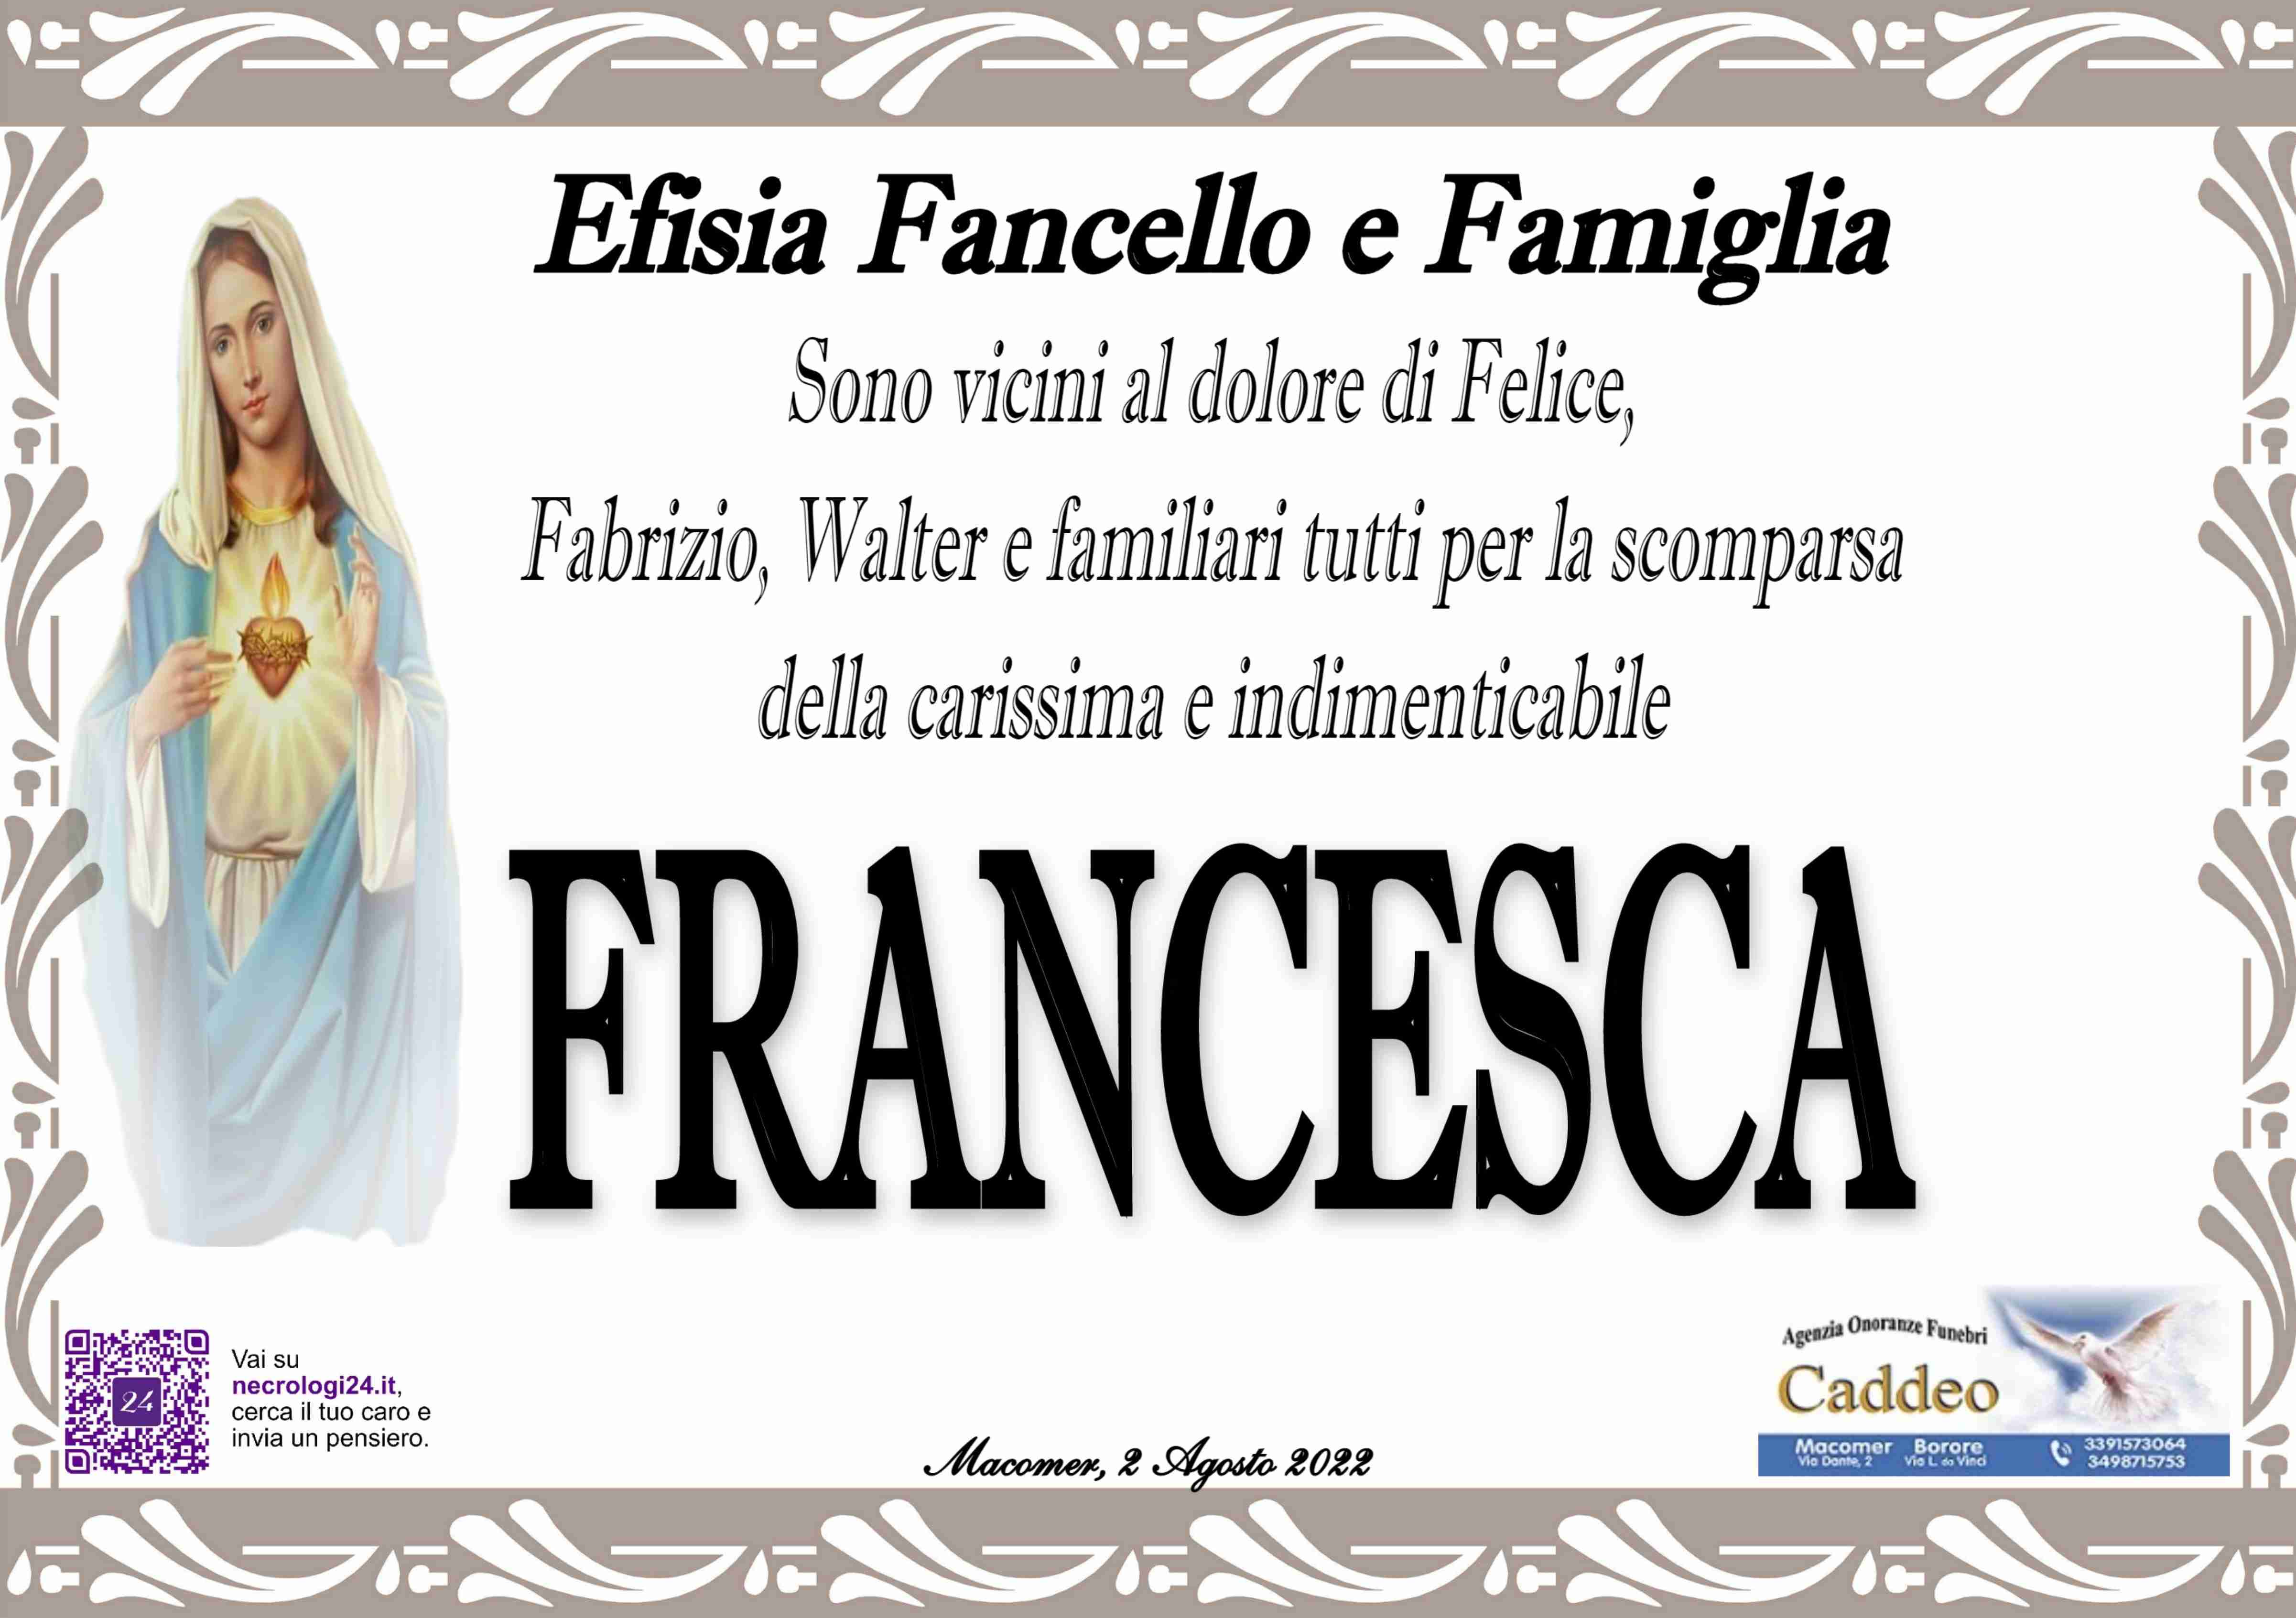 Francesca Maria Itria Piras